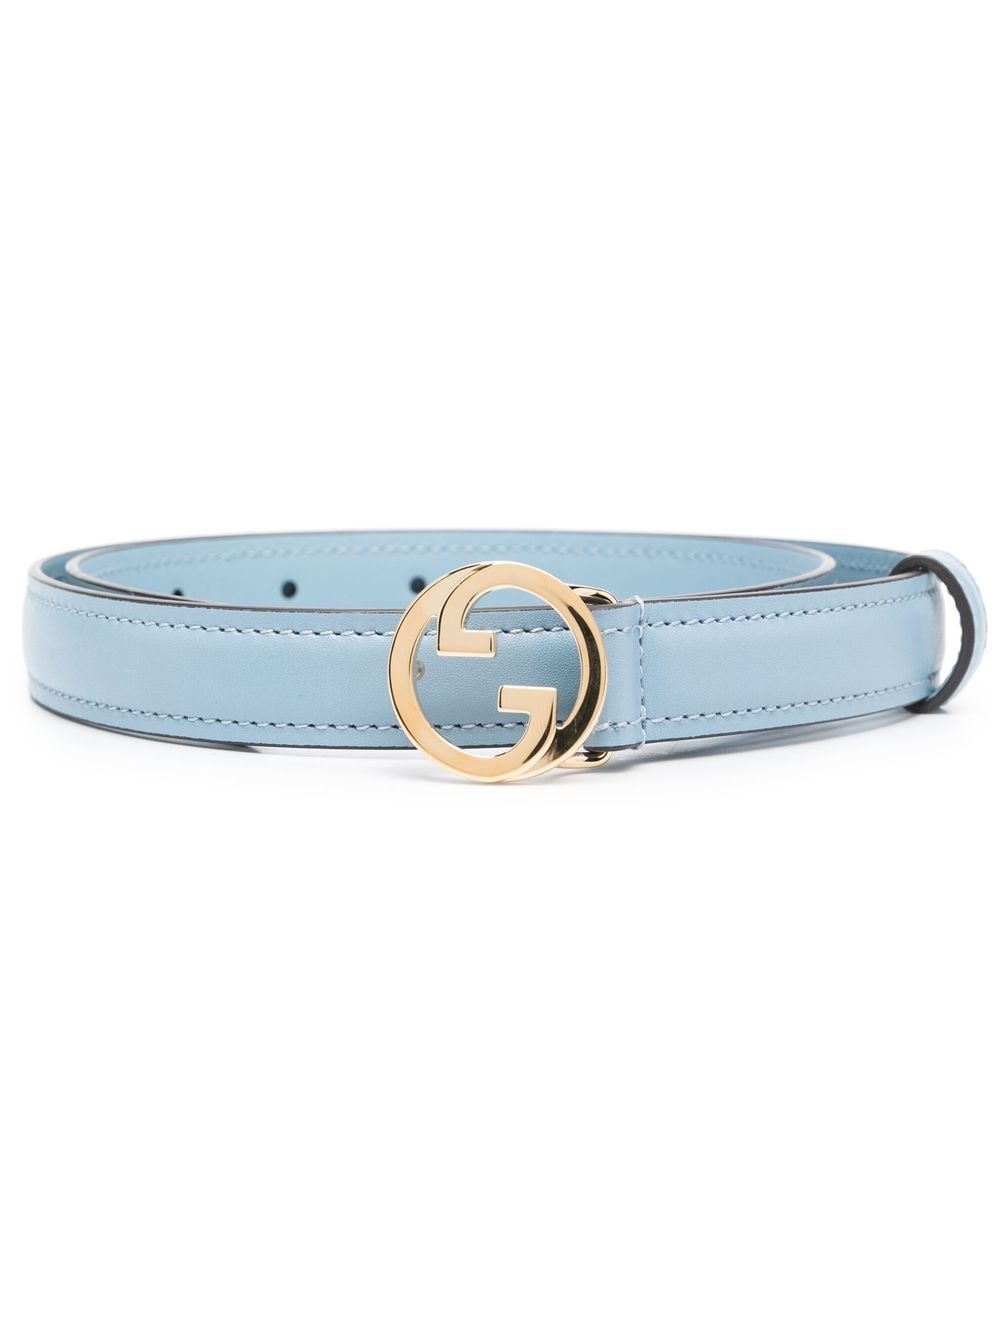 Gucci Blondie Belt in Blue